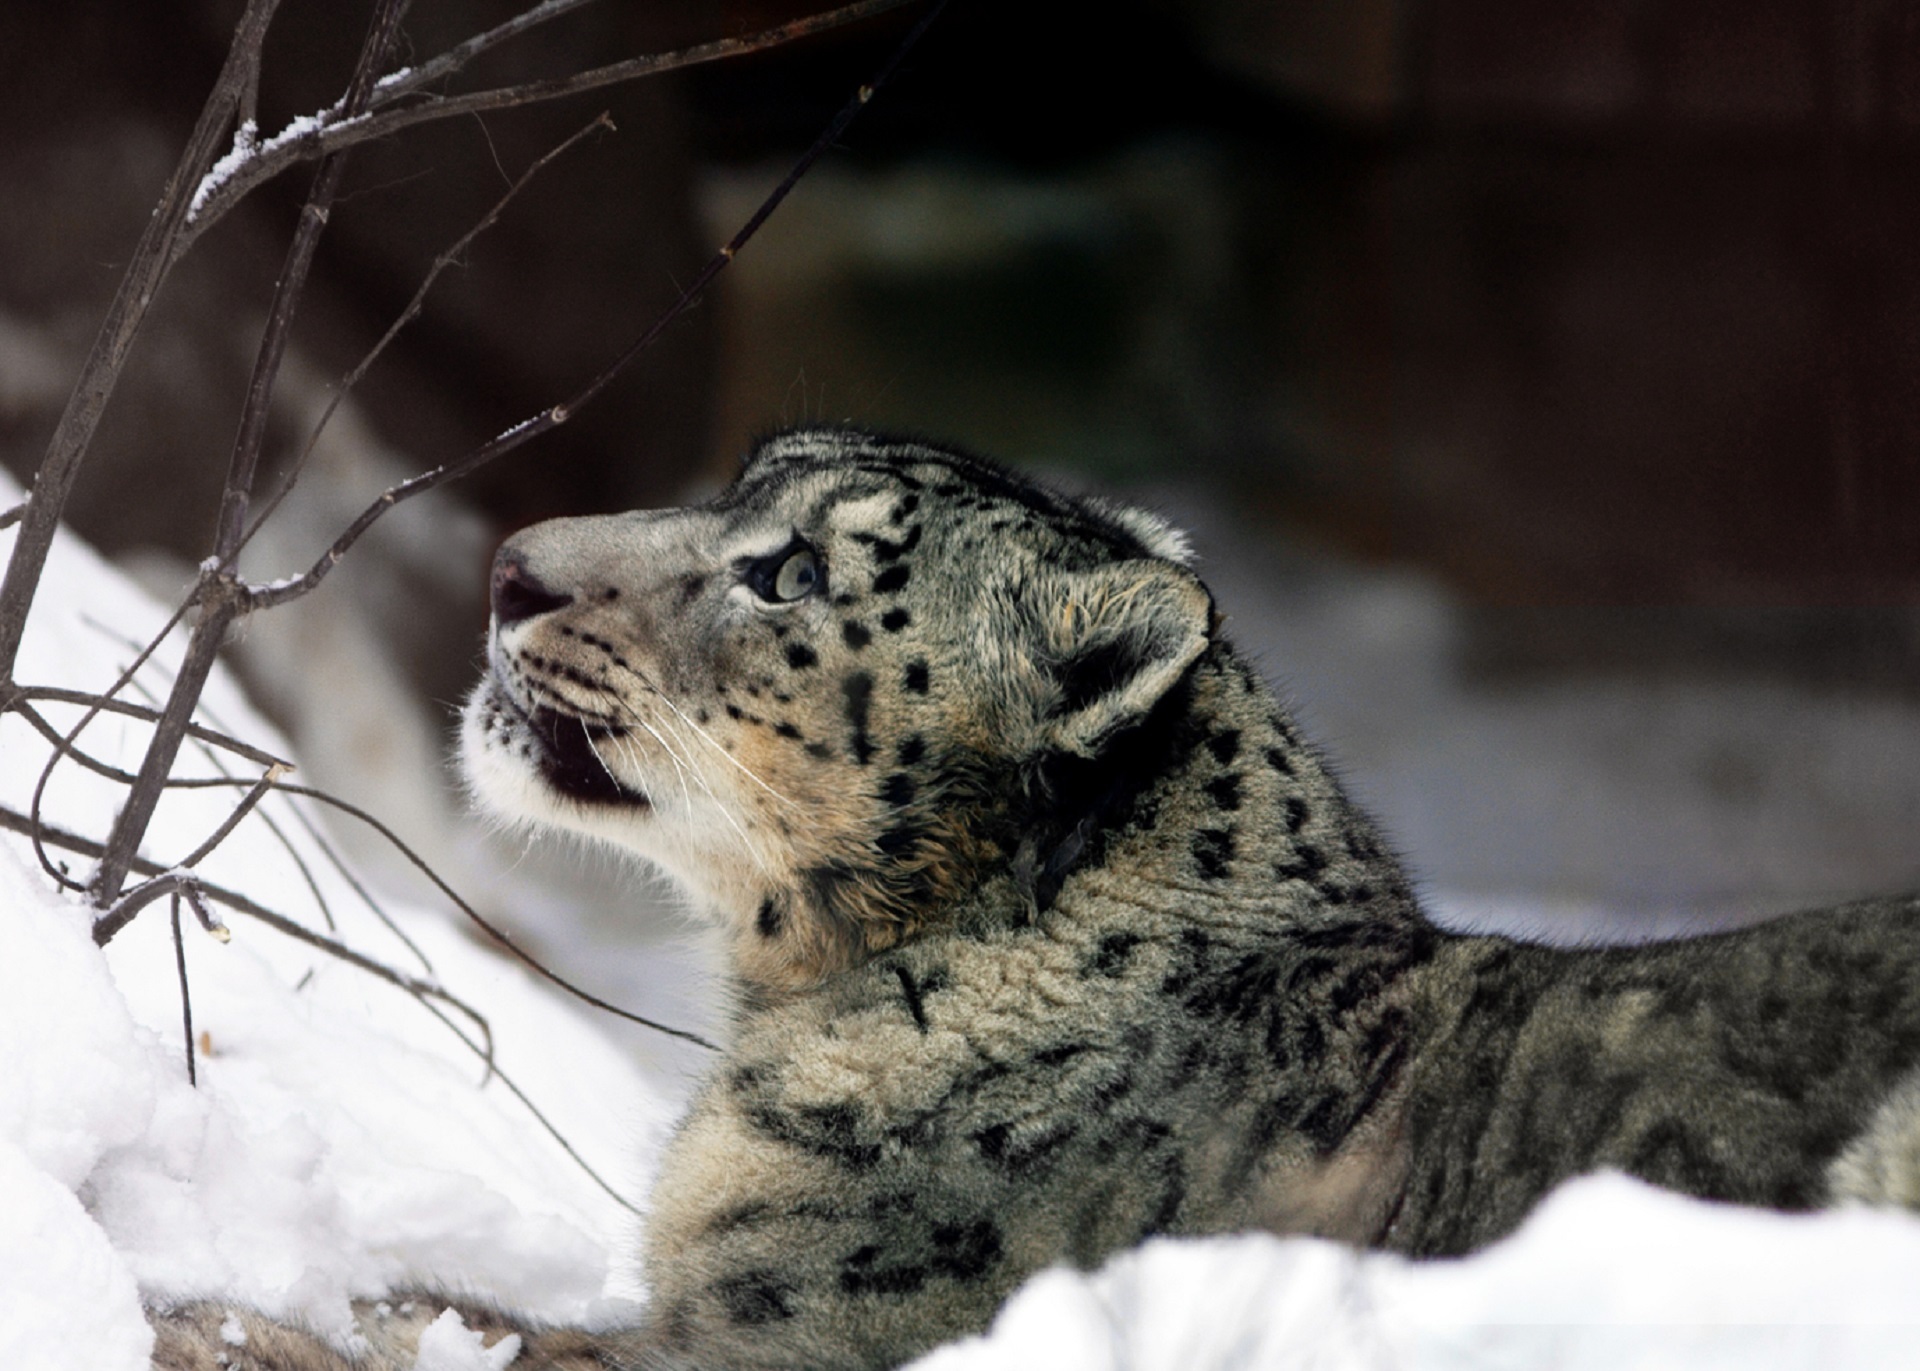 Snow leopard pose photo